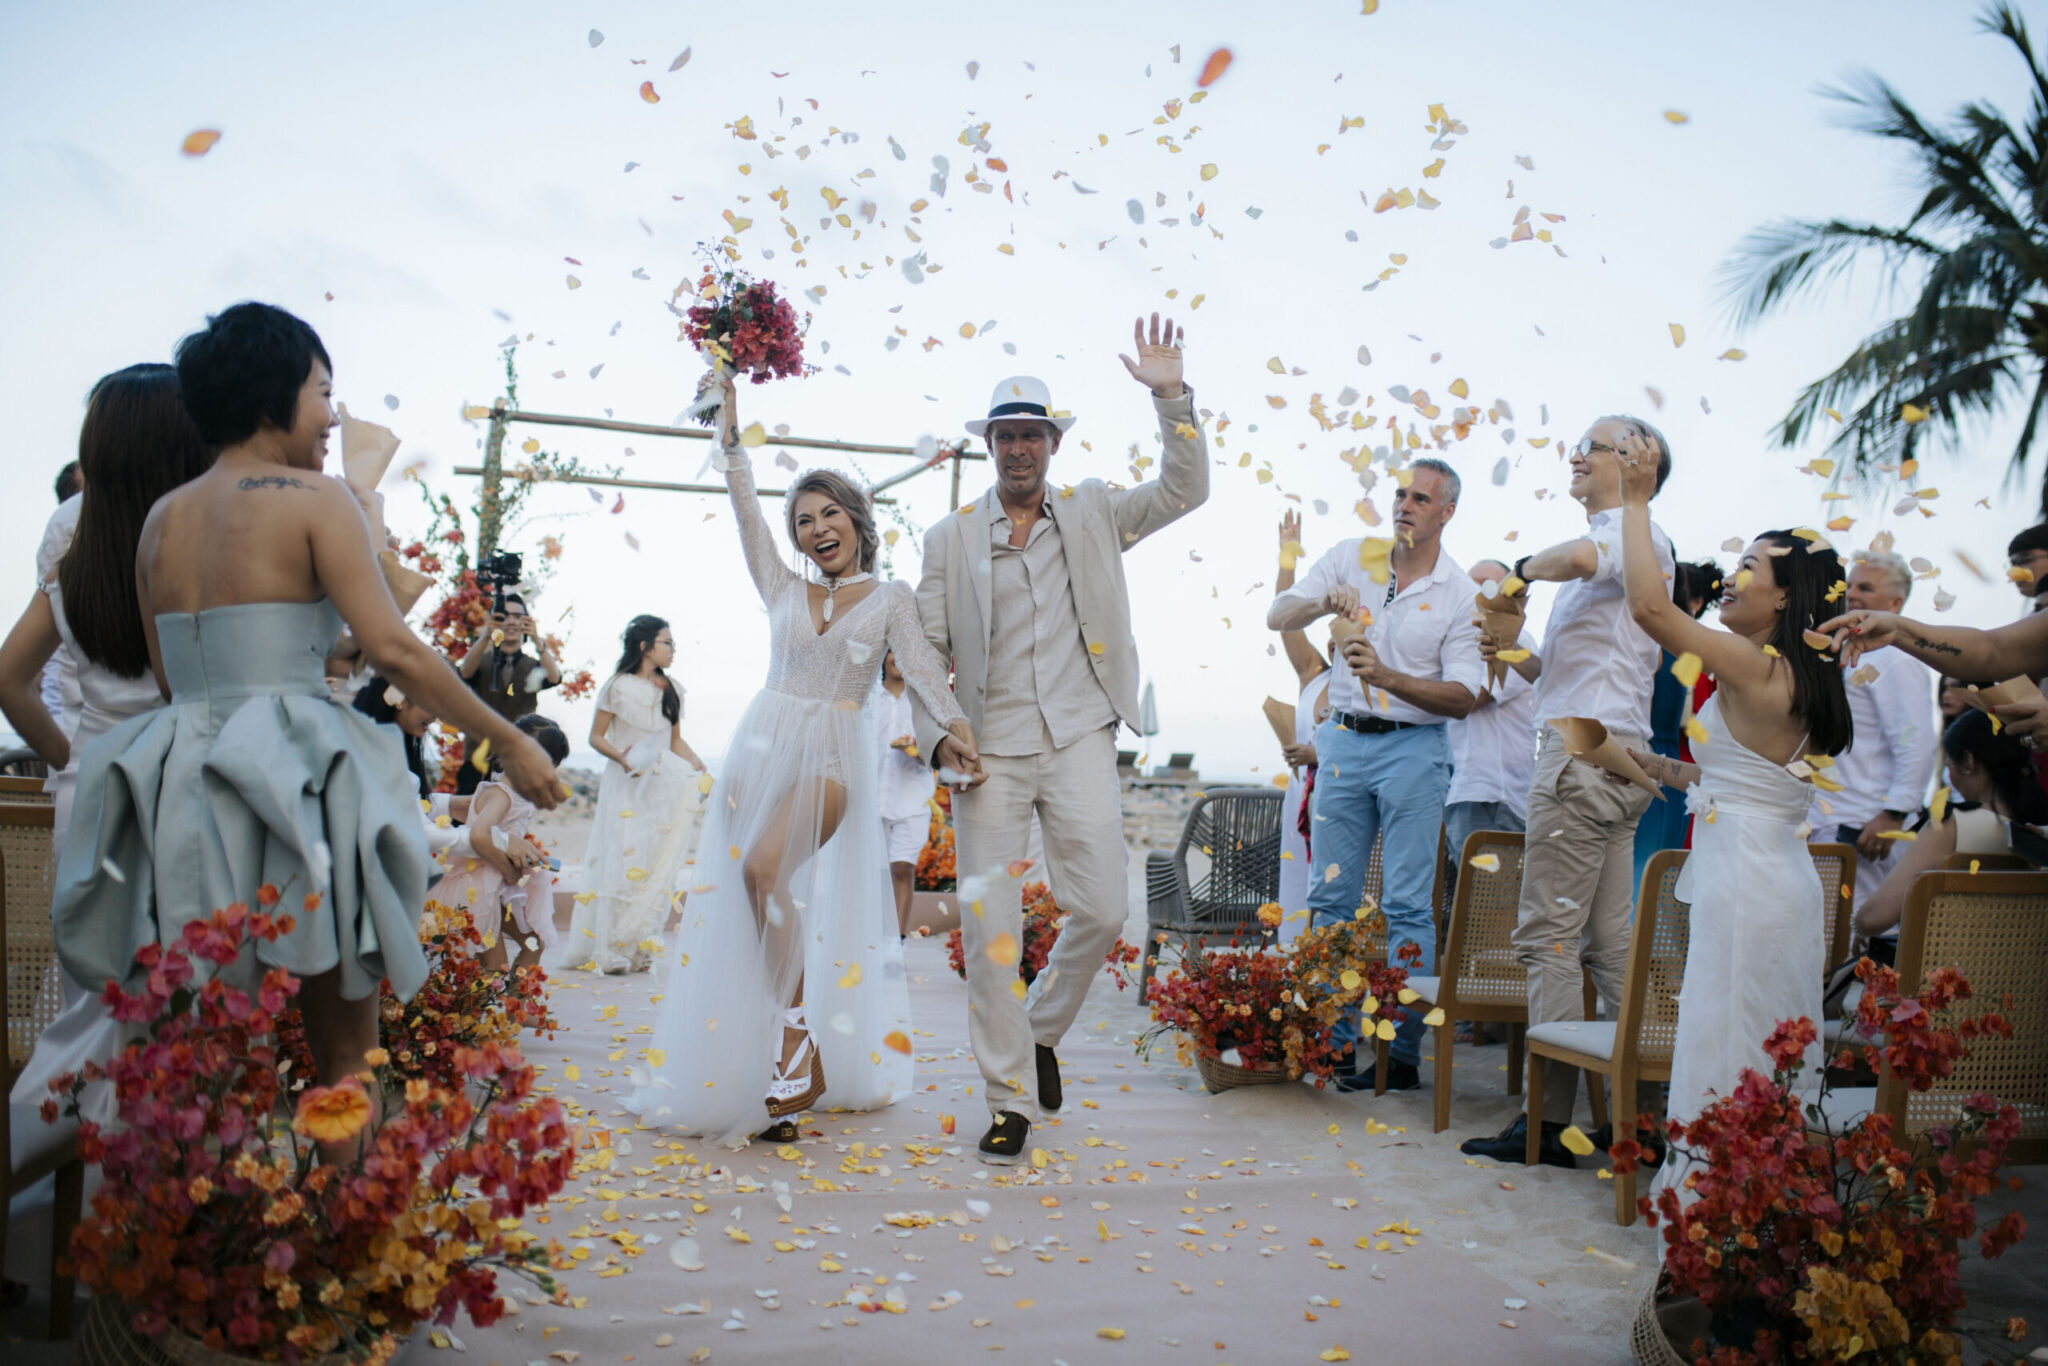 A colorful beach wedding